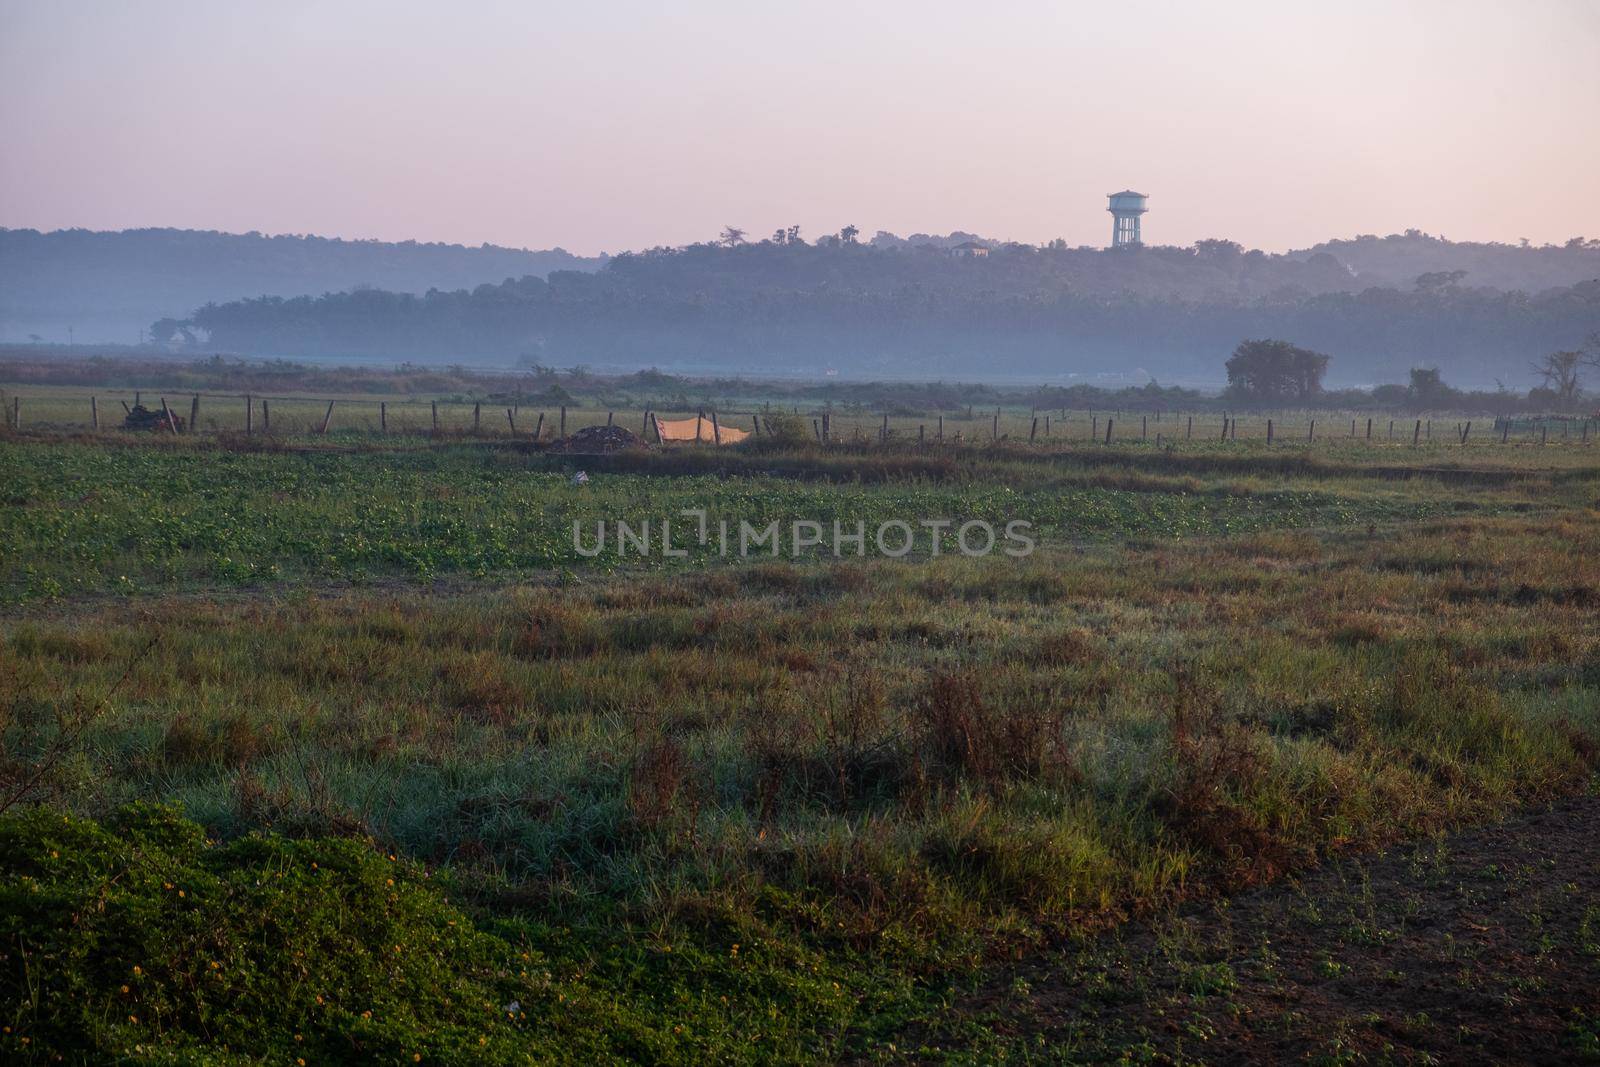 Sunrise, road in Indian fields by snep_photo